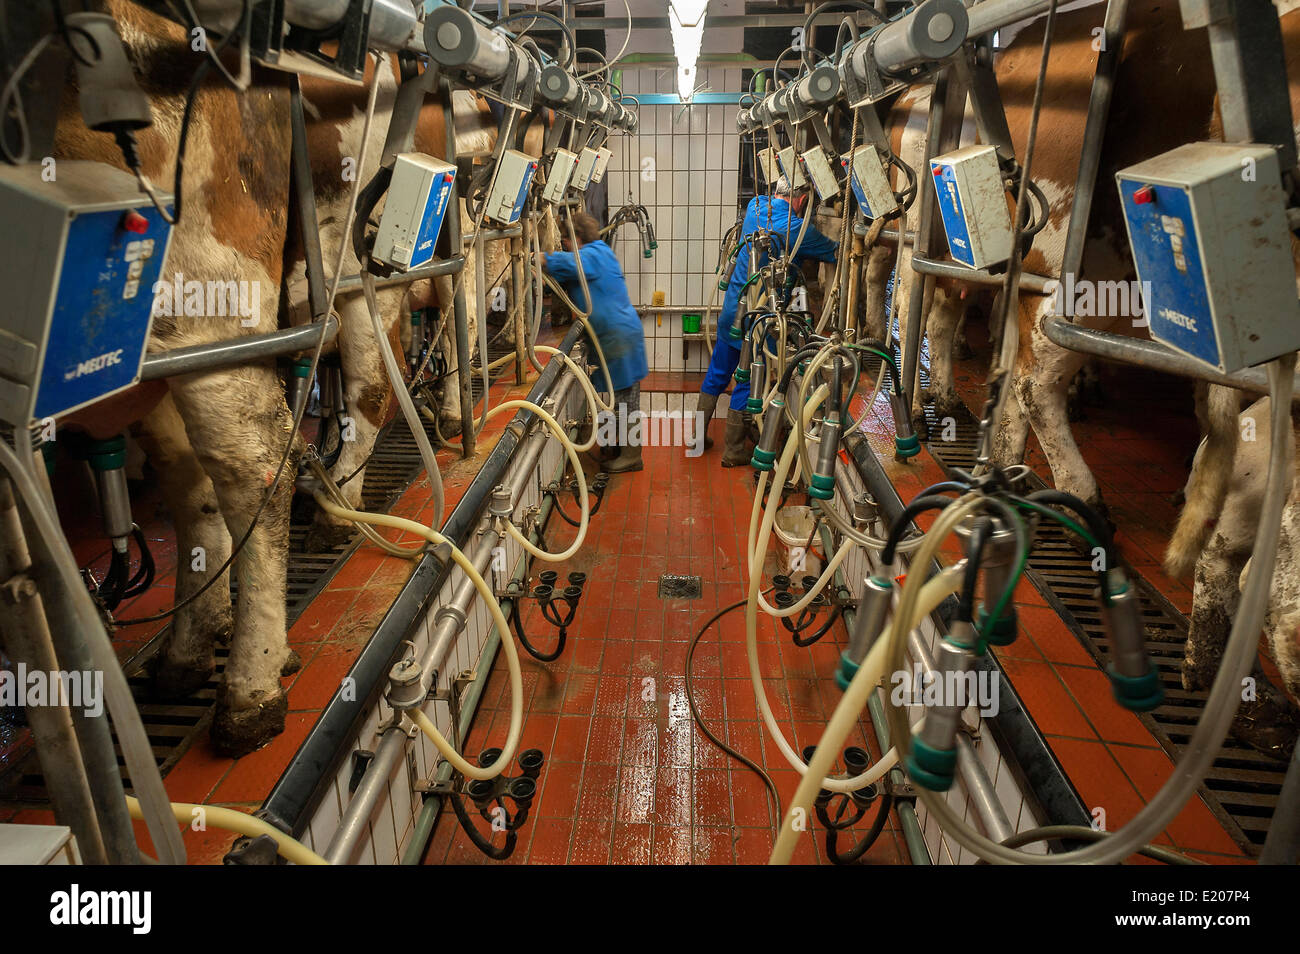 Cows being milked in a herringbone milking parlor, Bavaria, Germany Stock Photo